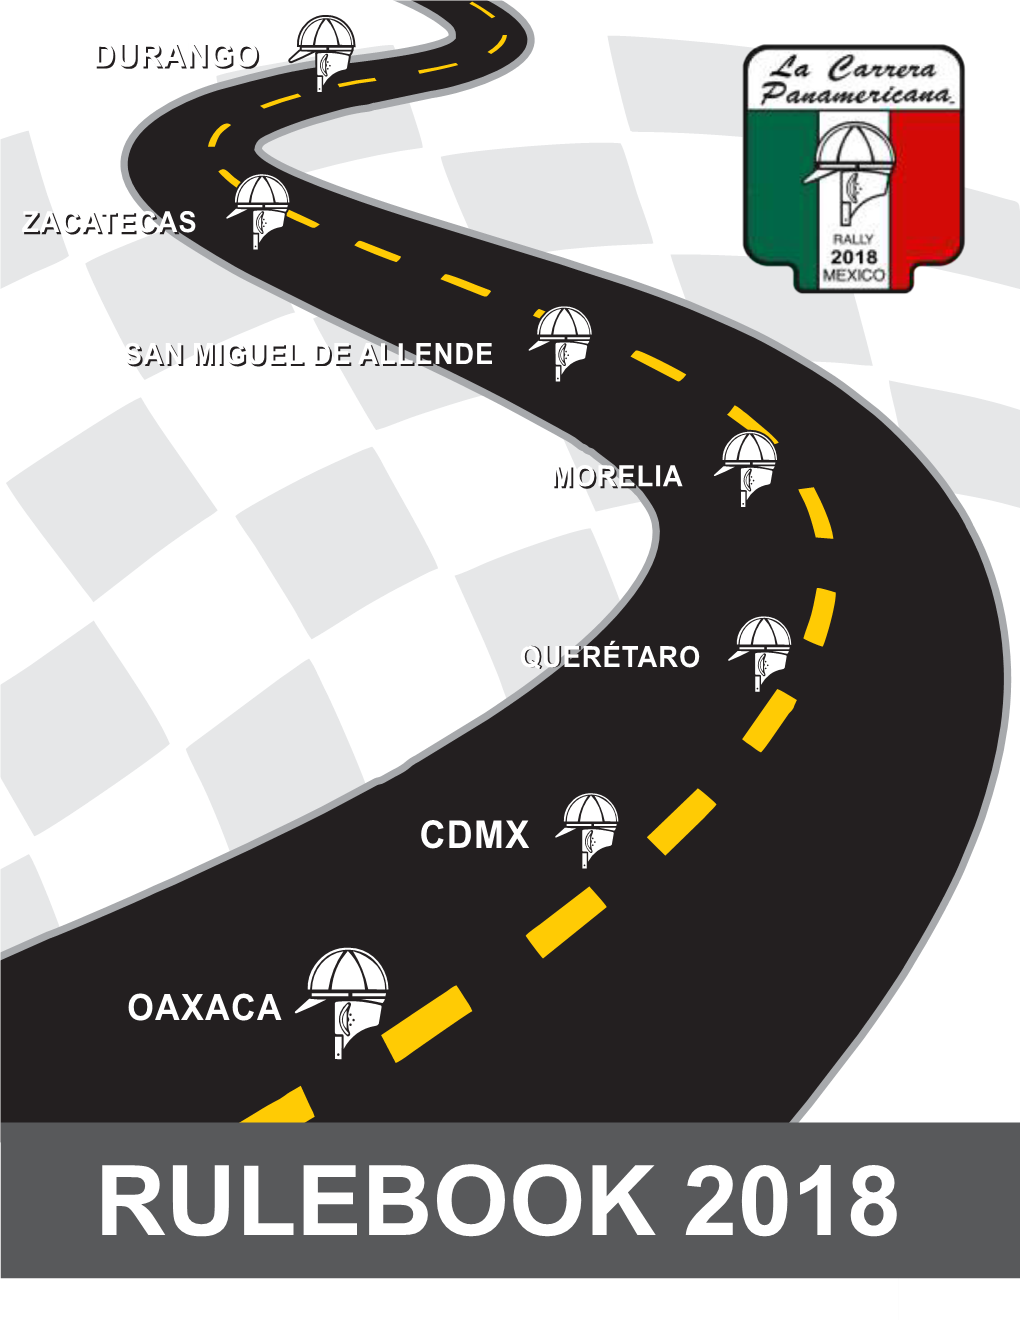 RULEBOOK 2018 La Carrera Panamericana